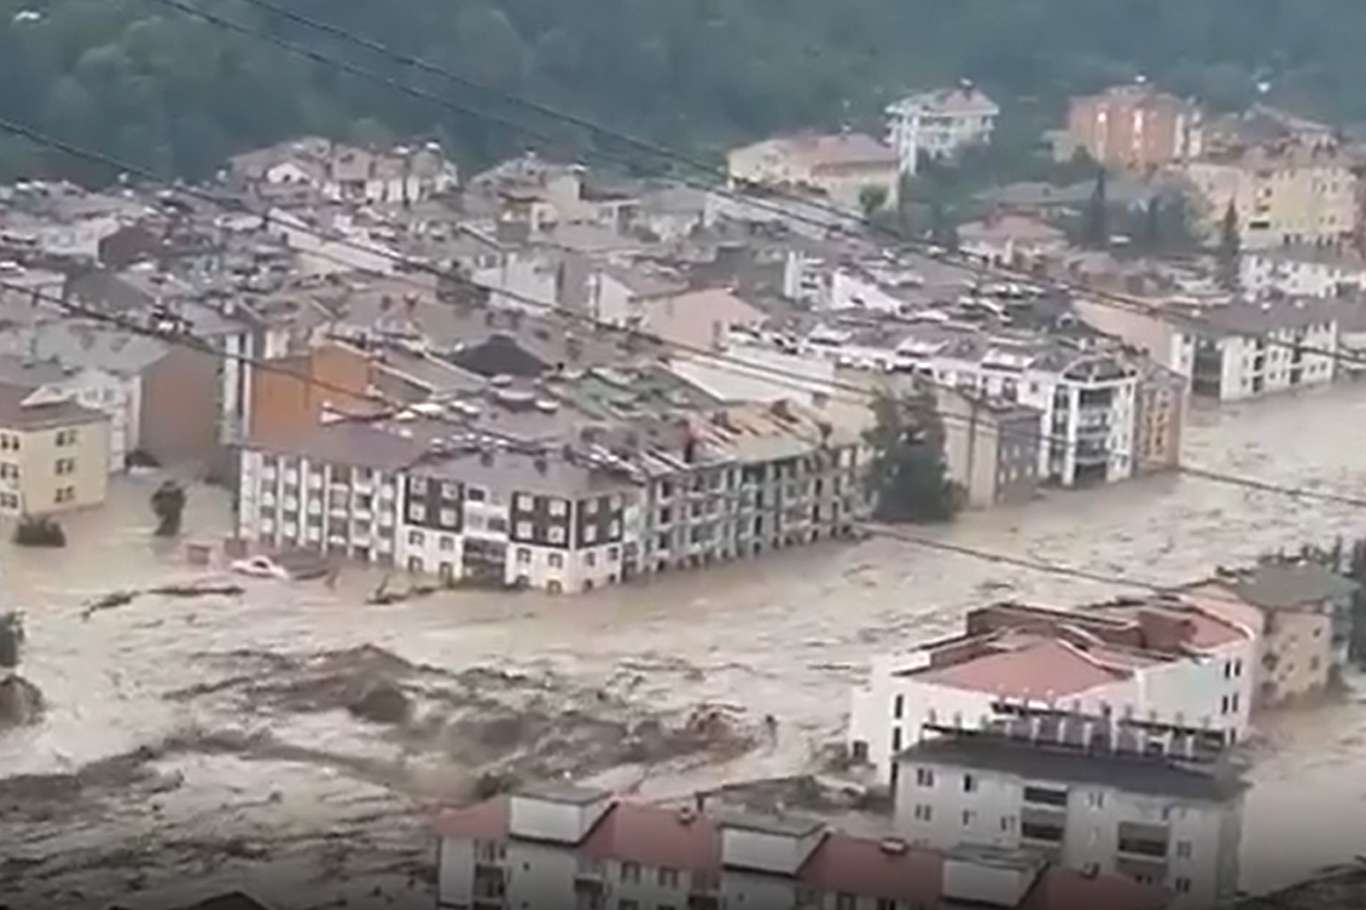 Turkey: Many people go missing after severe floods and landslides across the Black Sea region